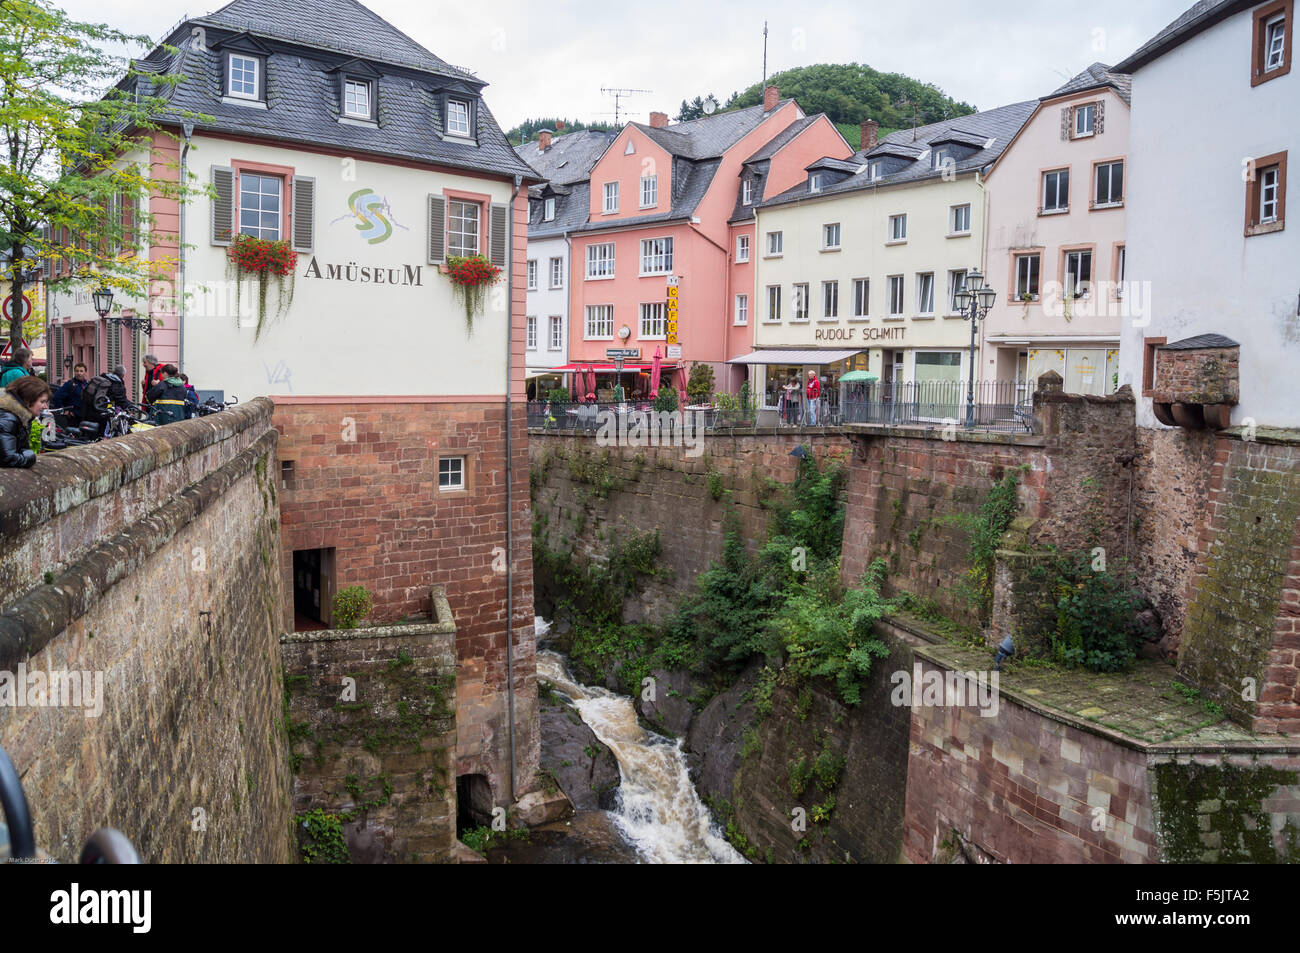 Leukbach waterfall, wasserfall, Altstadt, old town, Saarburg, Rheinland-Pfalz, Germany Stock Photo